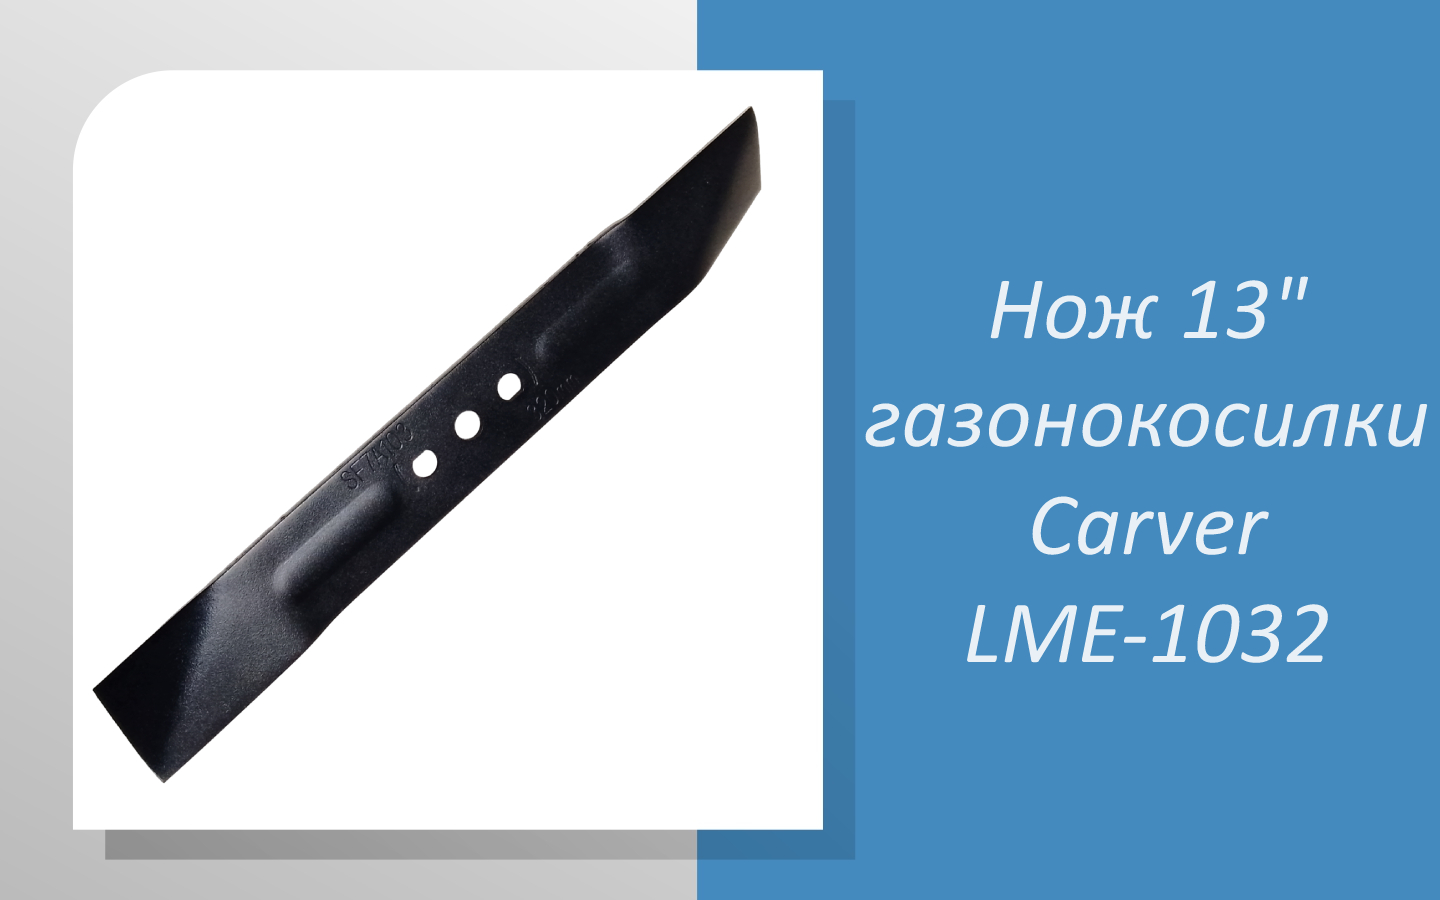 Нож 13" газонокосилки Carver LME-1032